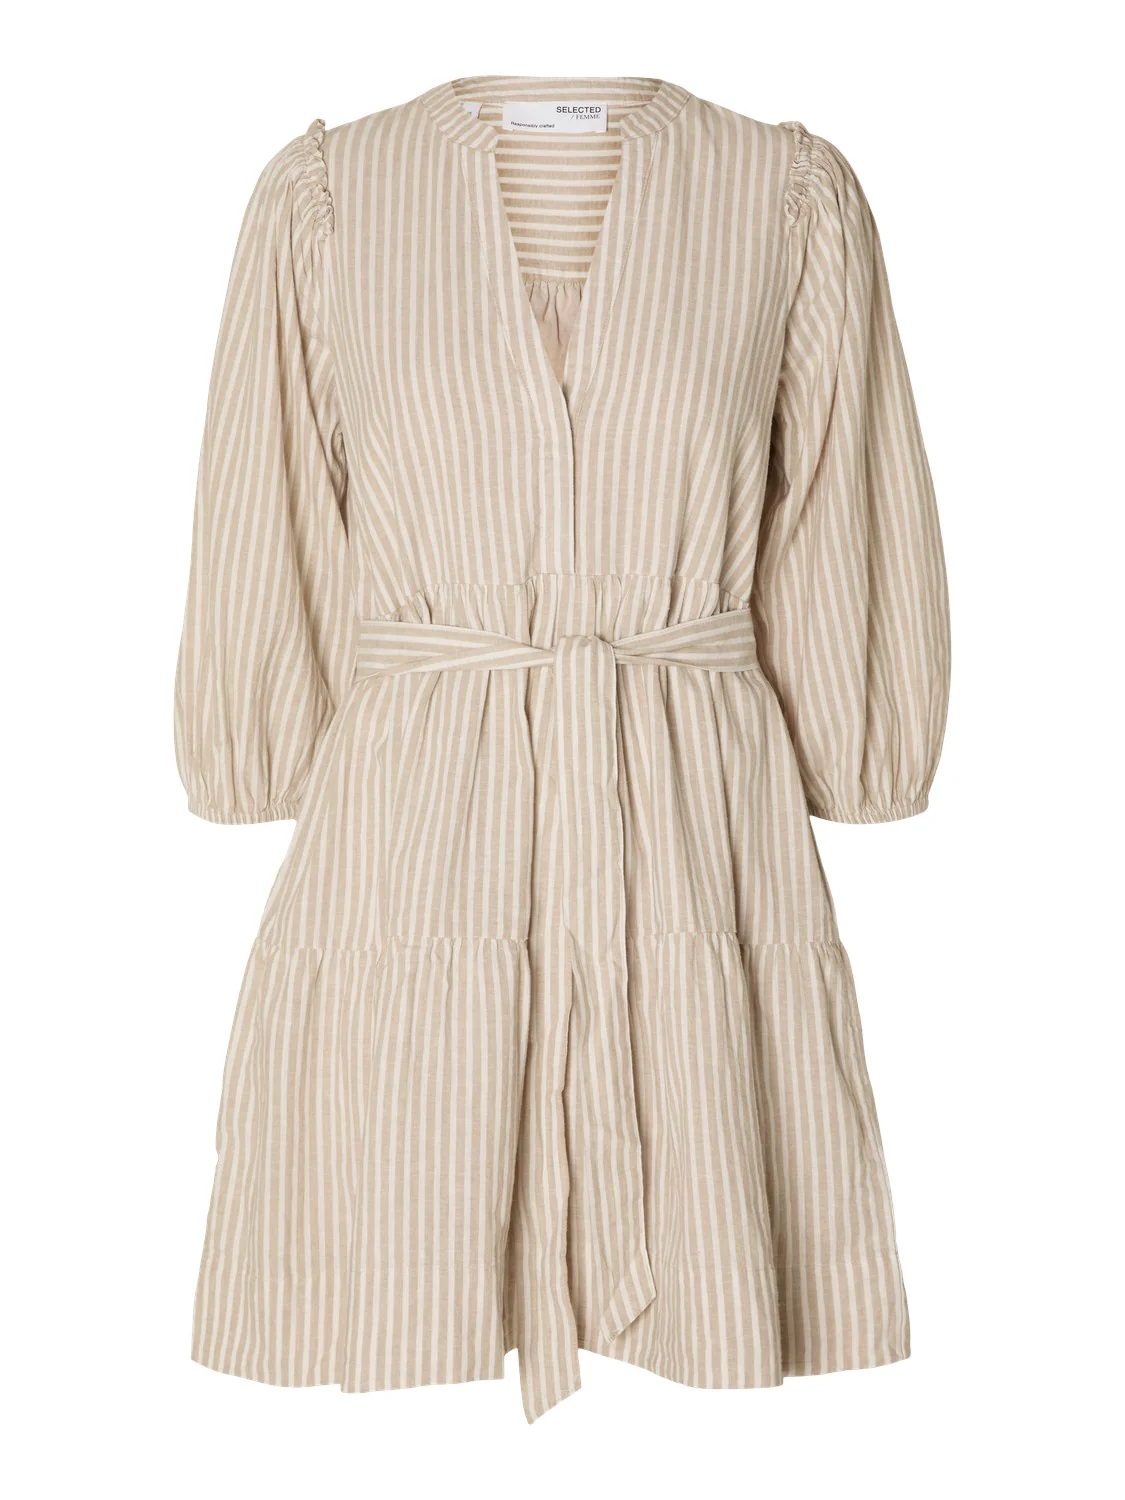 Selected Femme Hillie 3/4 Striped Short Linen Dress